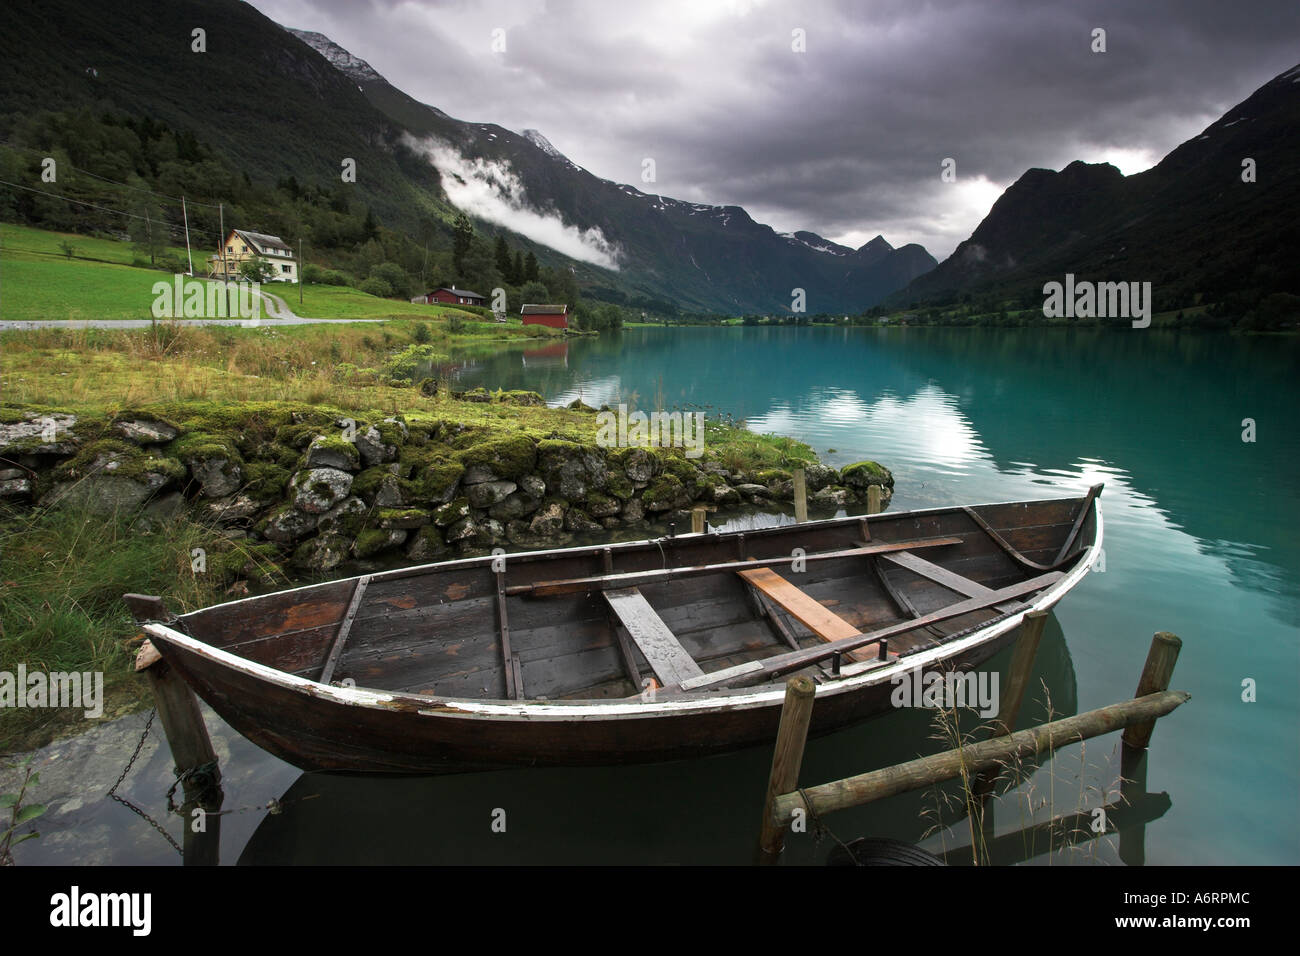 Eine norwegische Ruderboot liegt angebunden in den Spiegel wie türkisfarbenen Wasser des Sees Olden, Norwegen Stockfoto